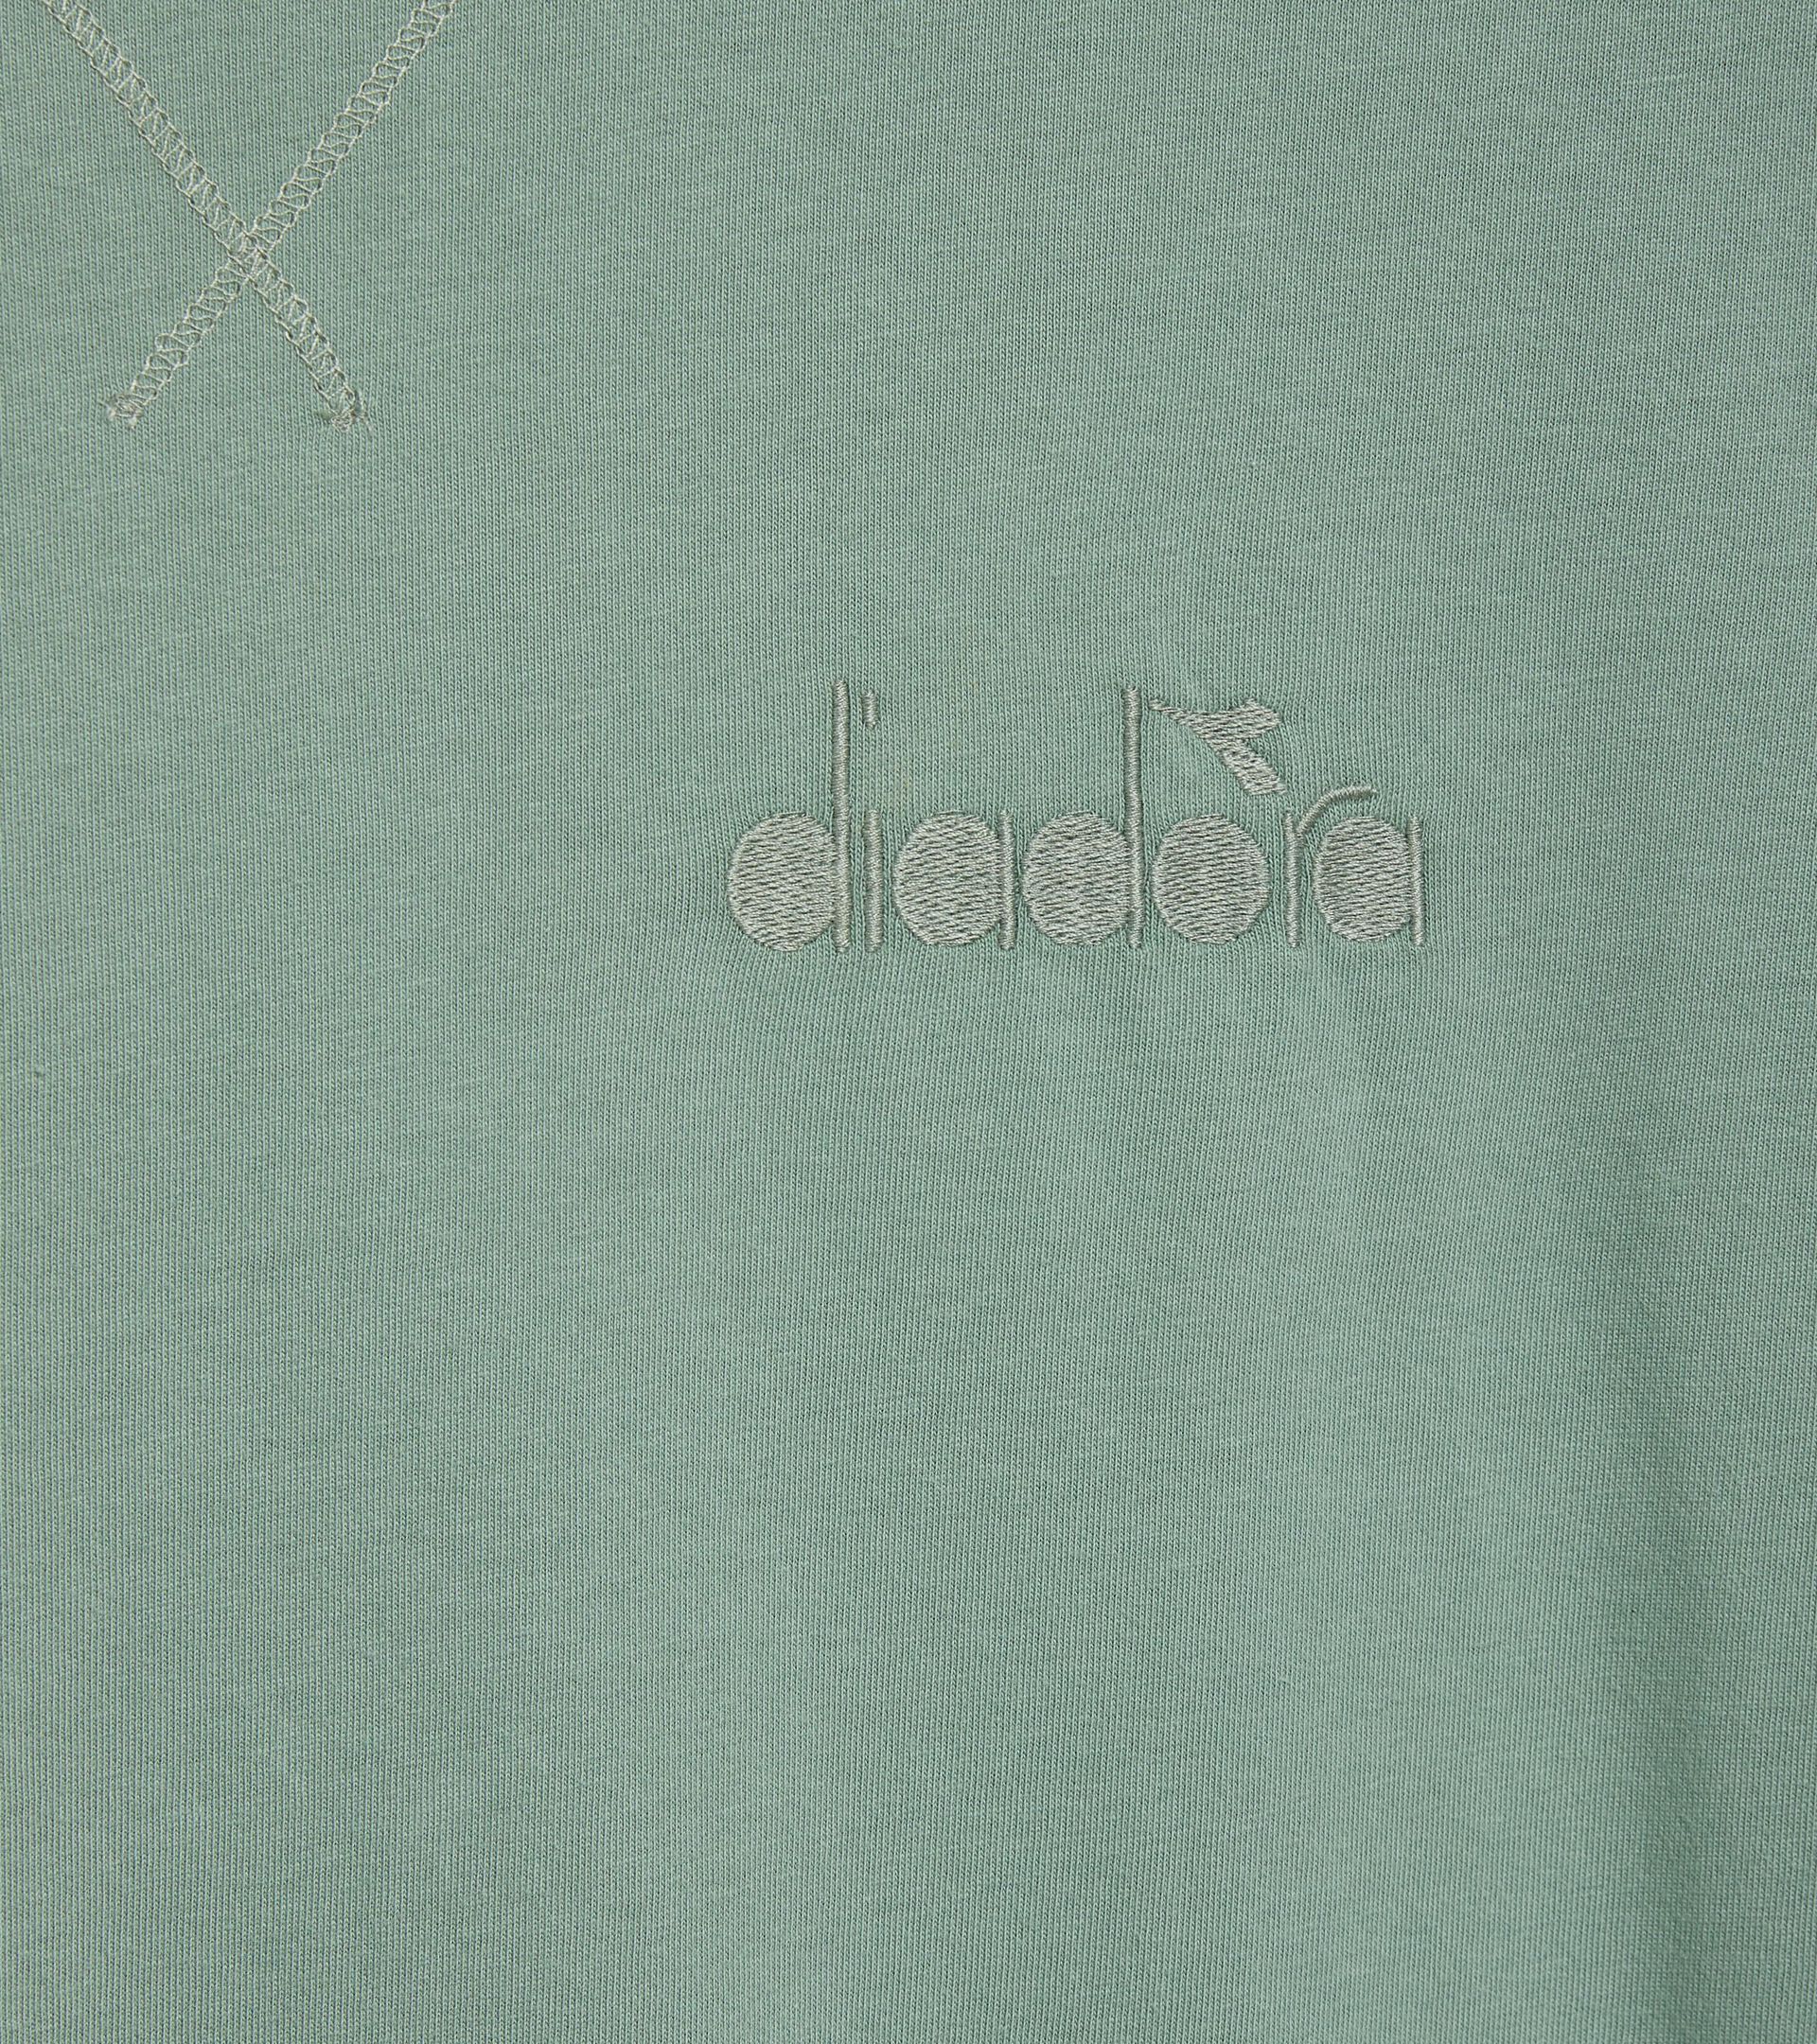 Camiseta - Gender neutral T-SHIRT SS ATHL. LOGO VERDE ICEBERG - Diadora